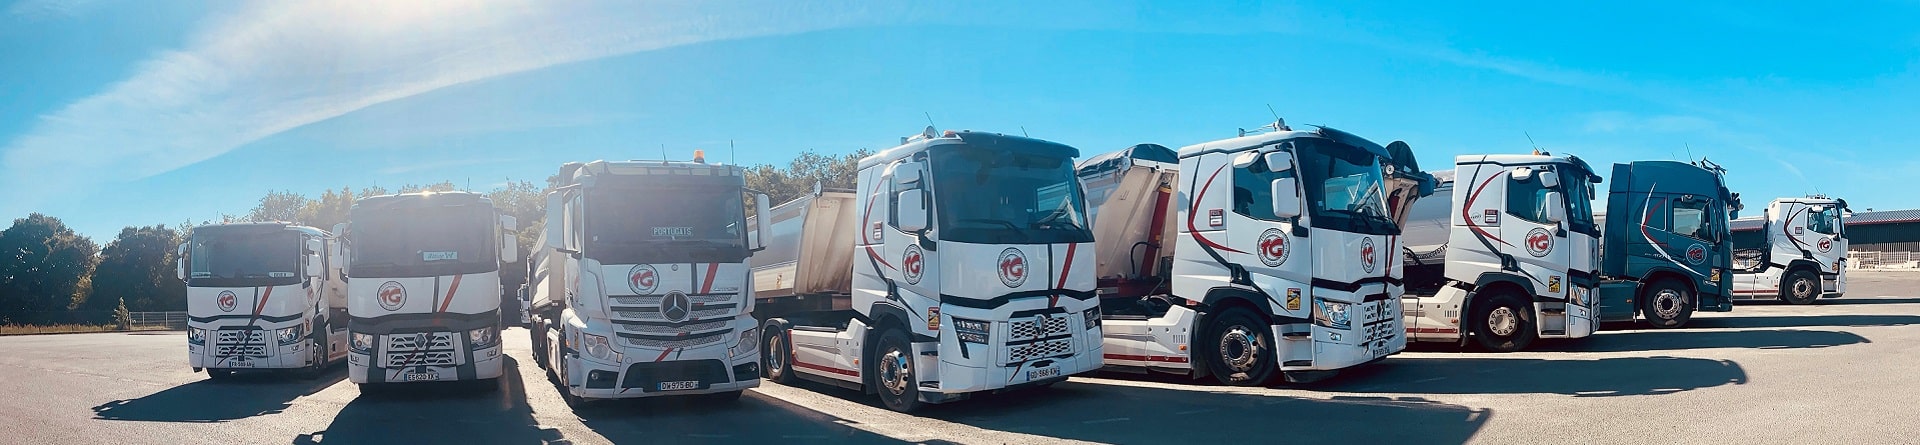 camions transports gibouleau